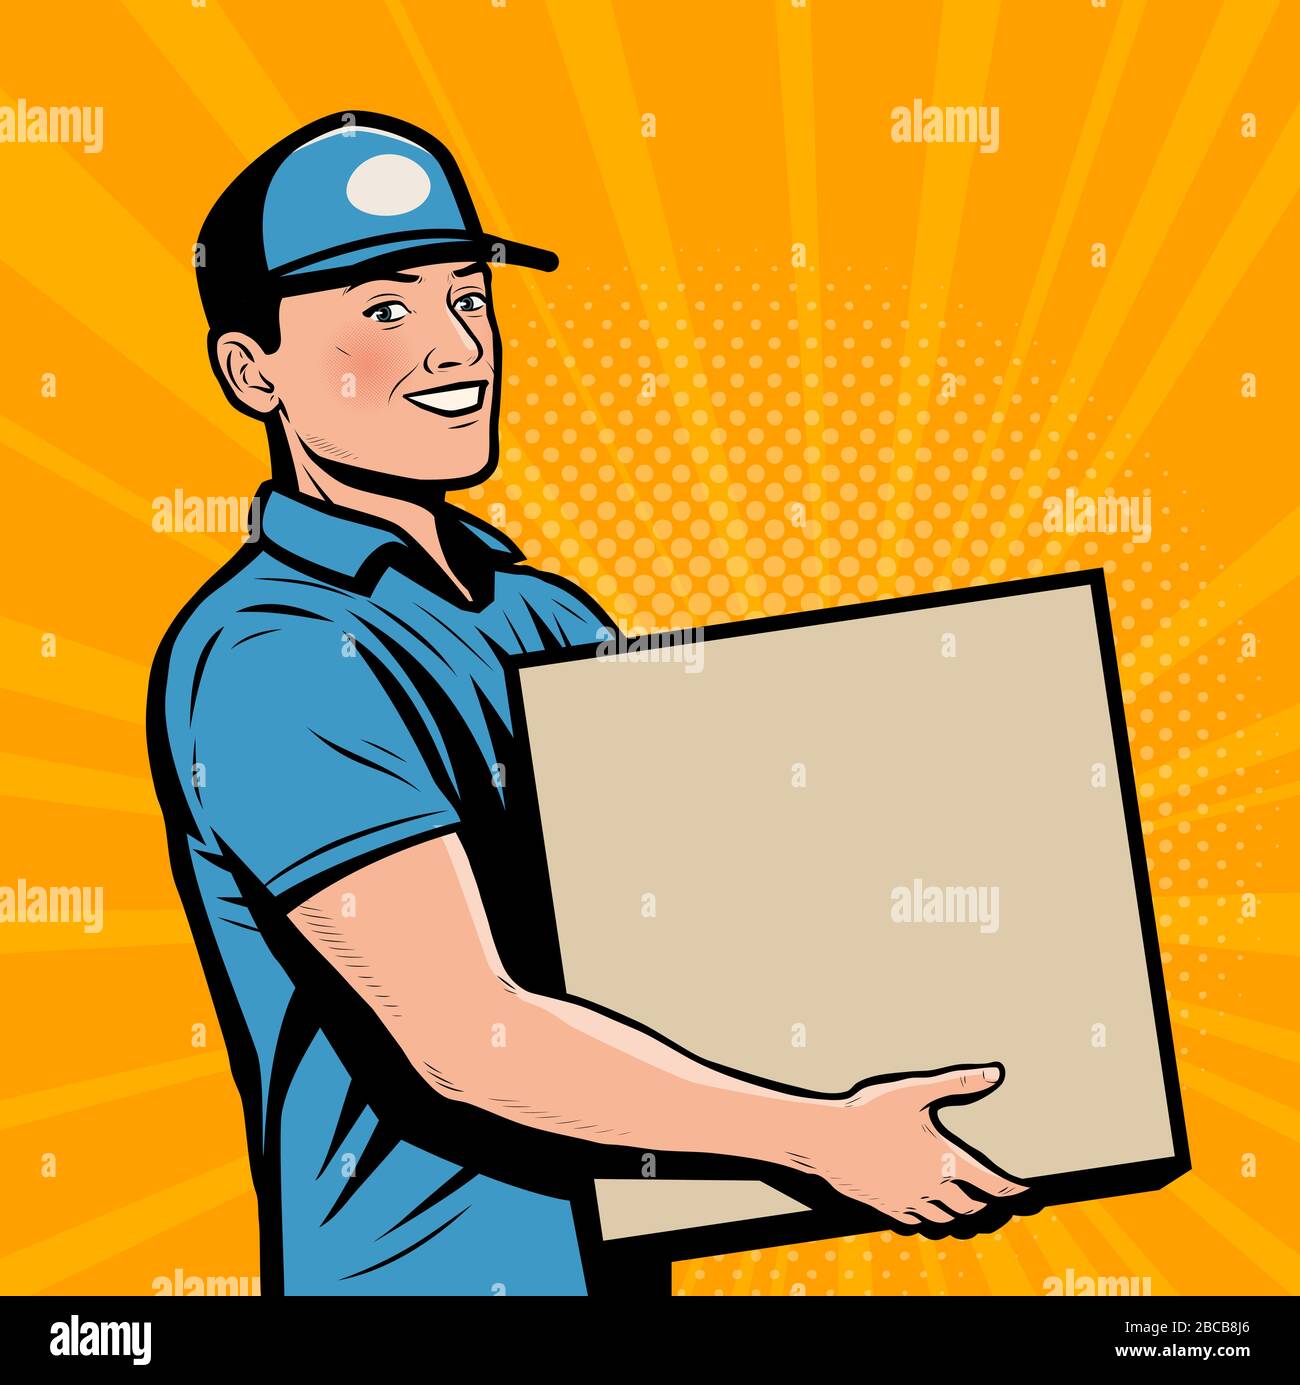 Delivery person worker delivered box. Retro comic pop art vector illustration Stock Vector